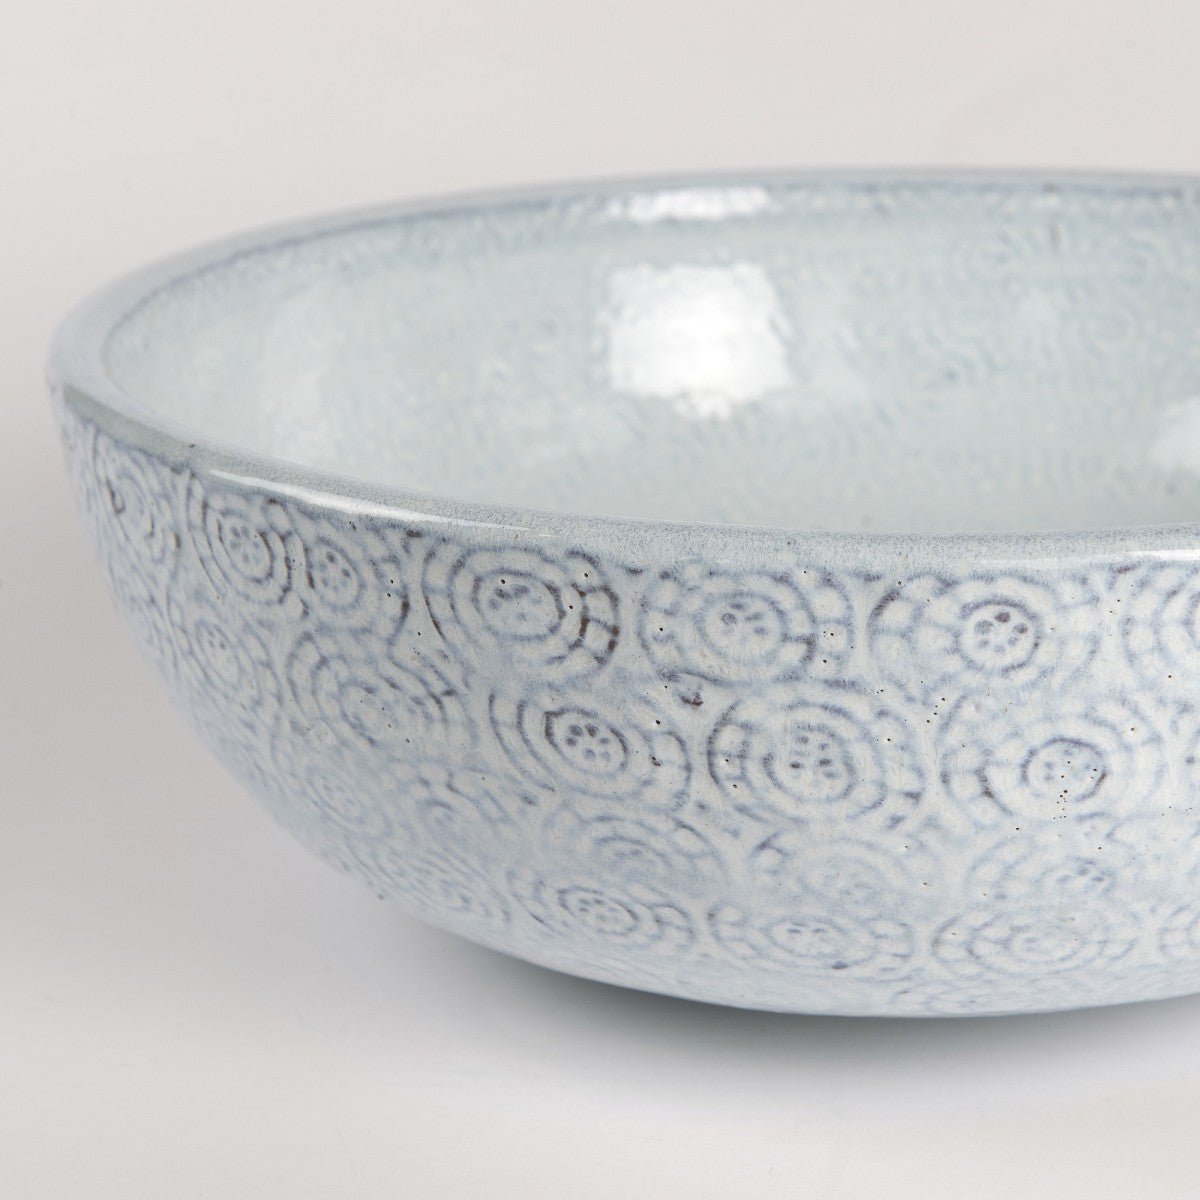 Handmade Ceramic White Bowl - The Tulip Tree Chiddingstone